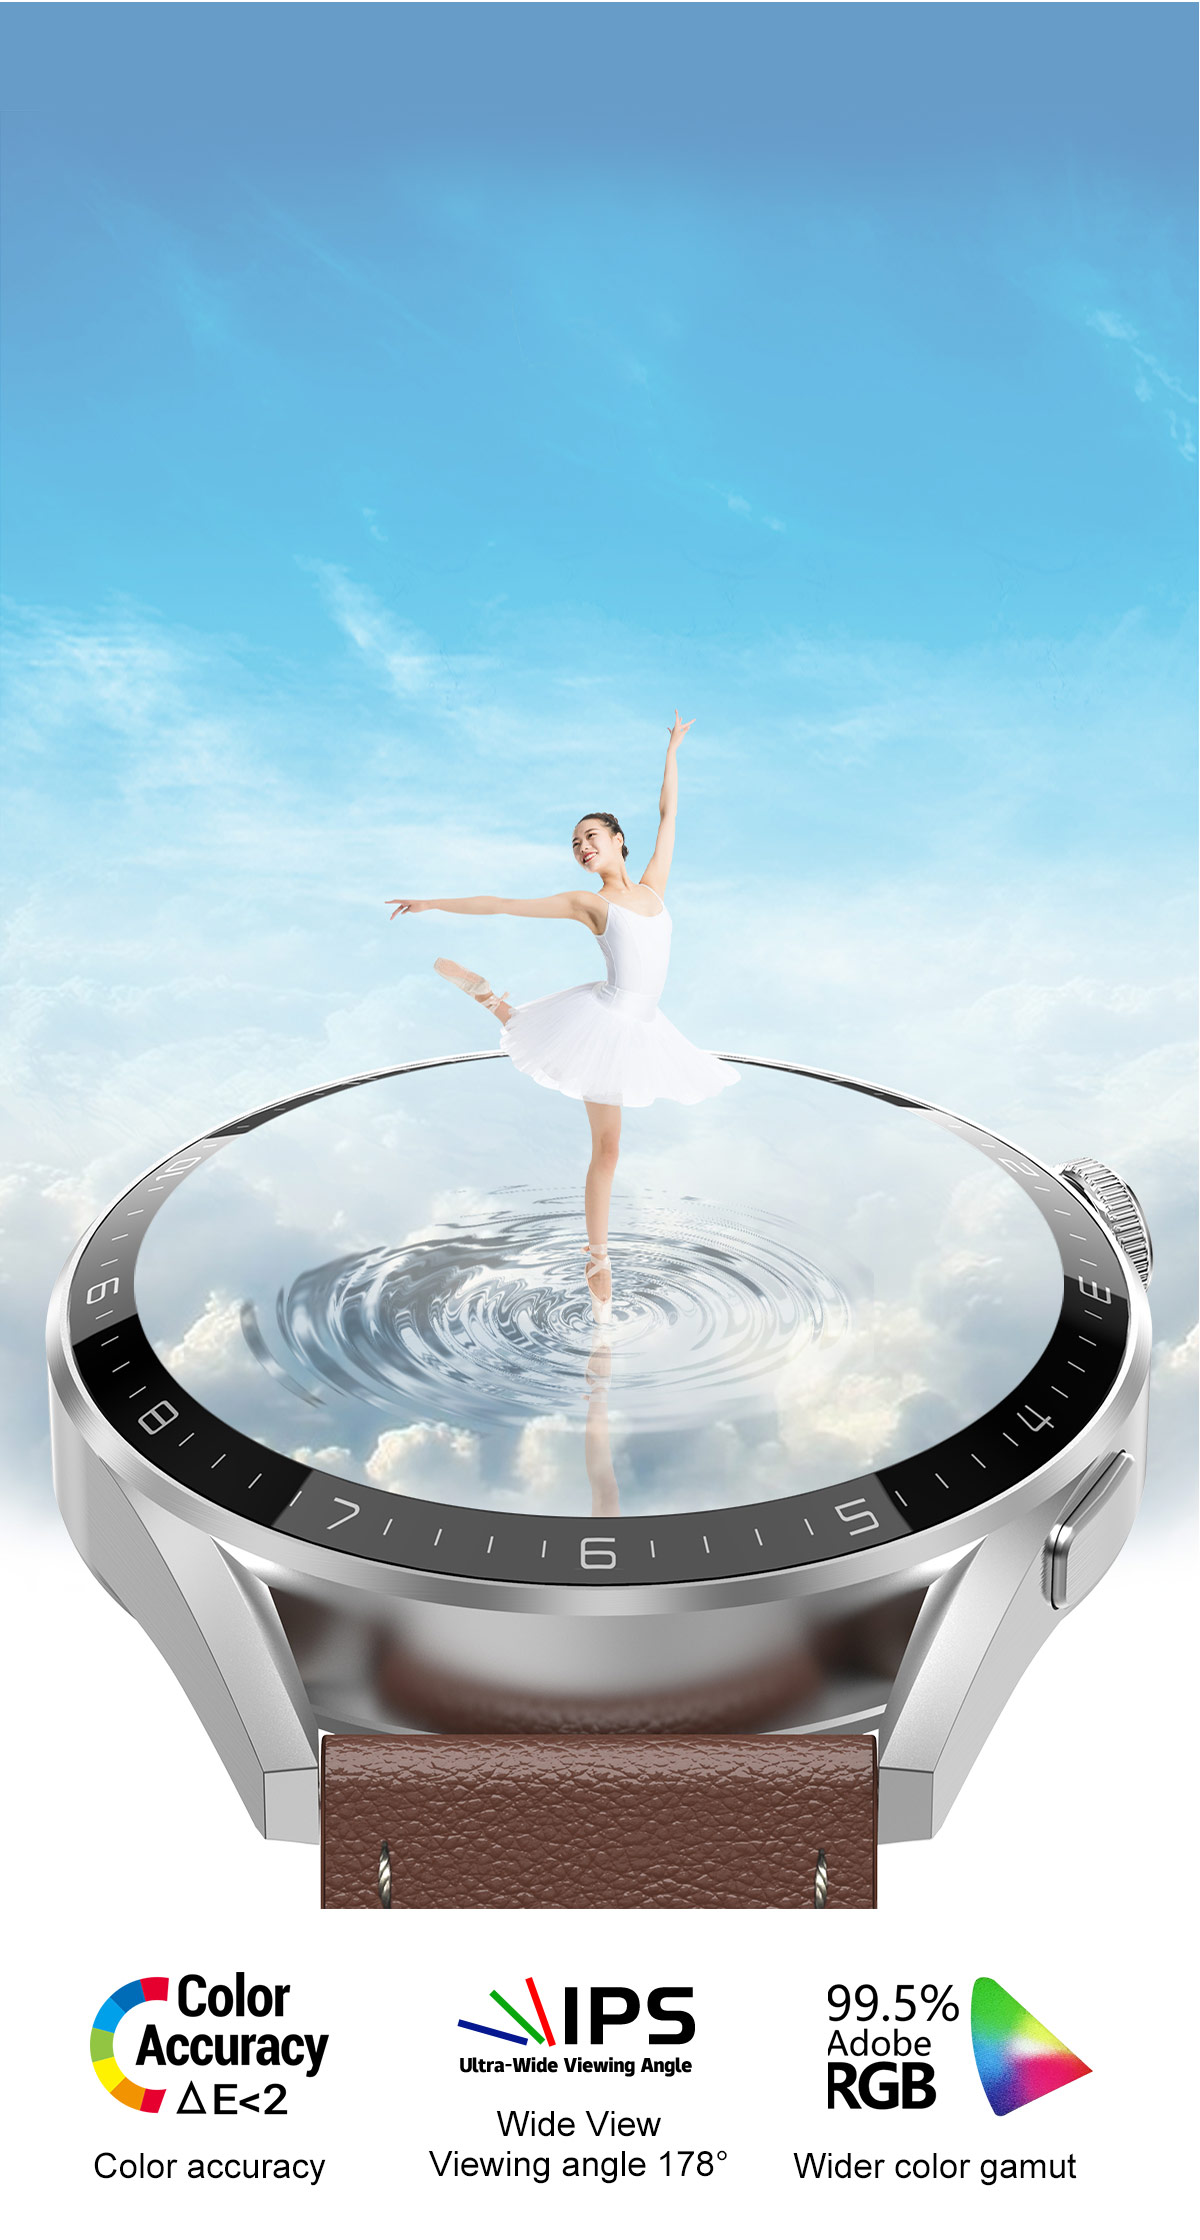 Smartwatch DT3 Max Mini